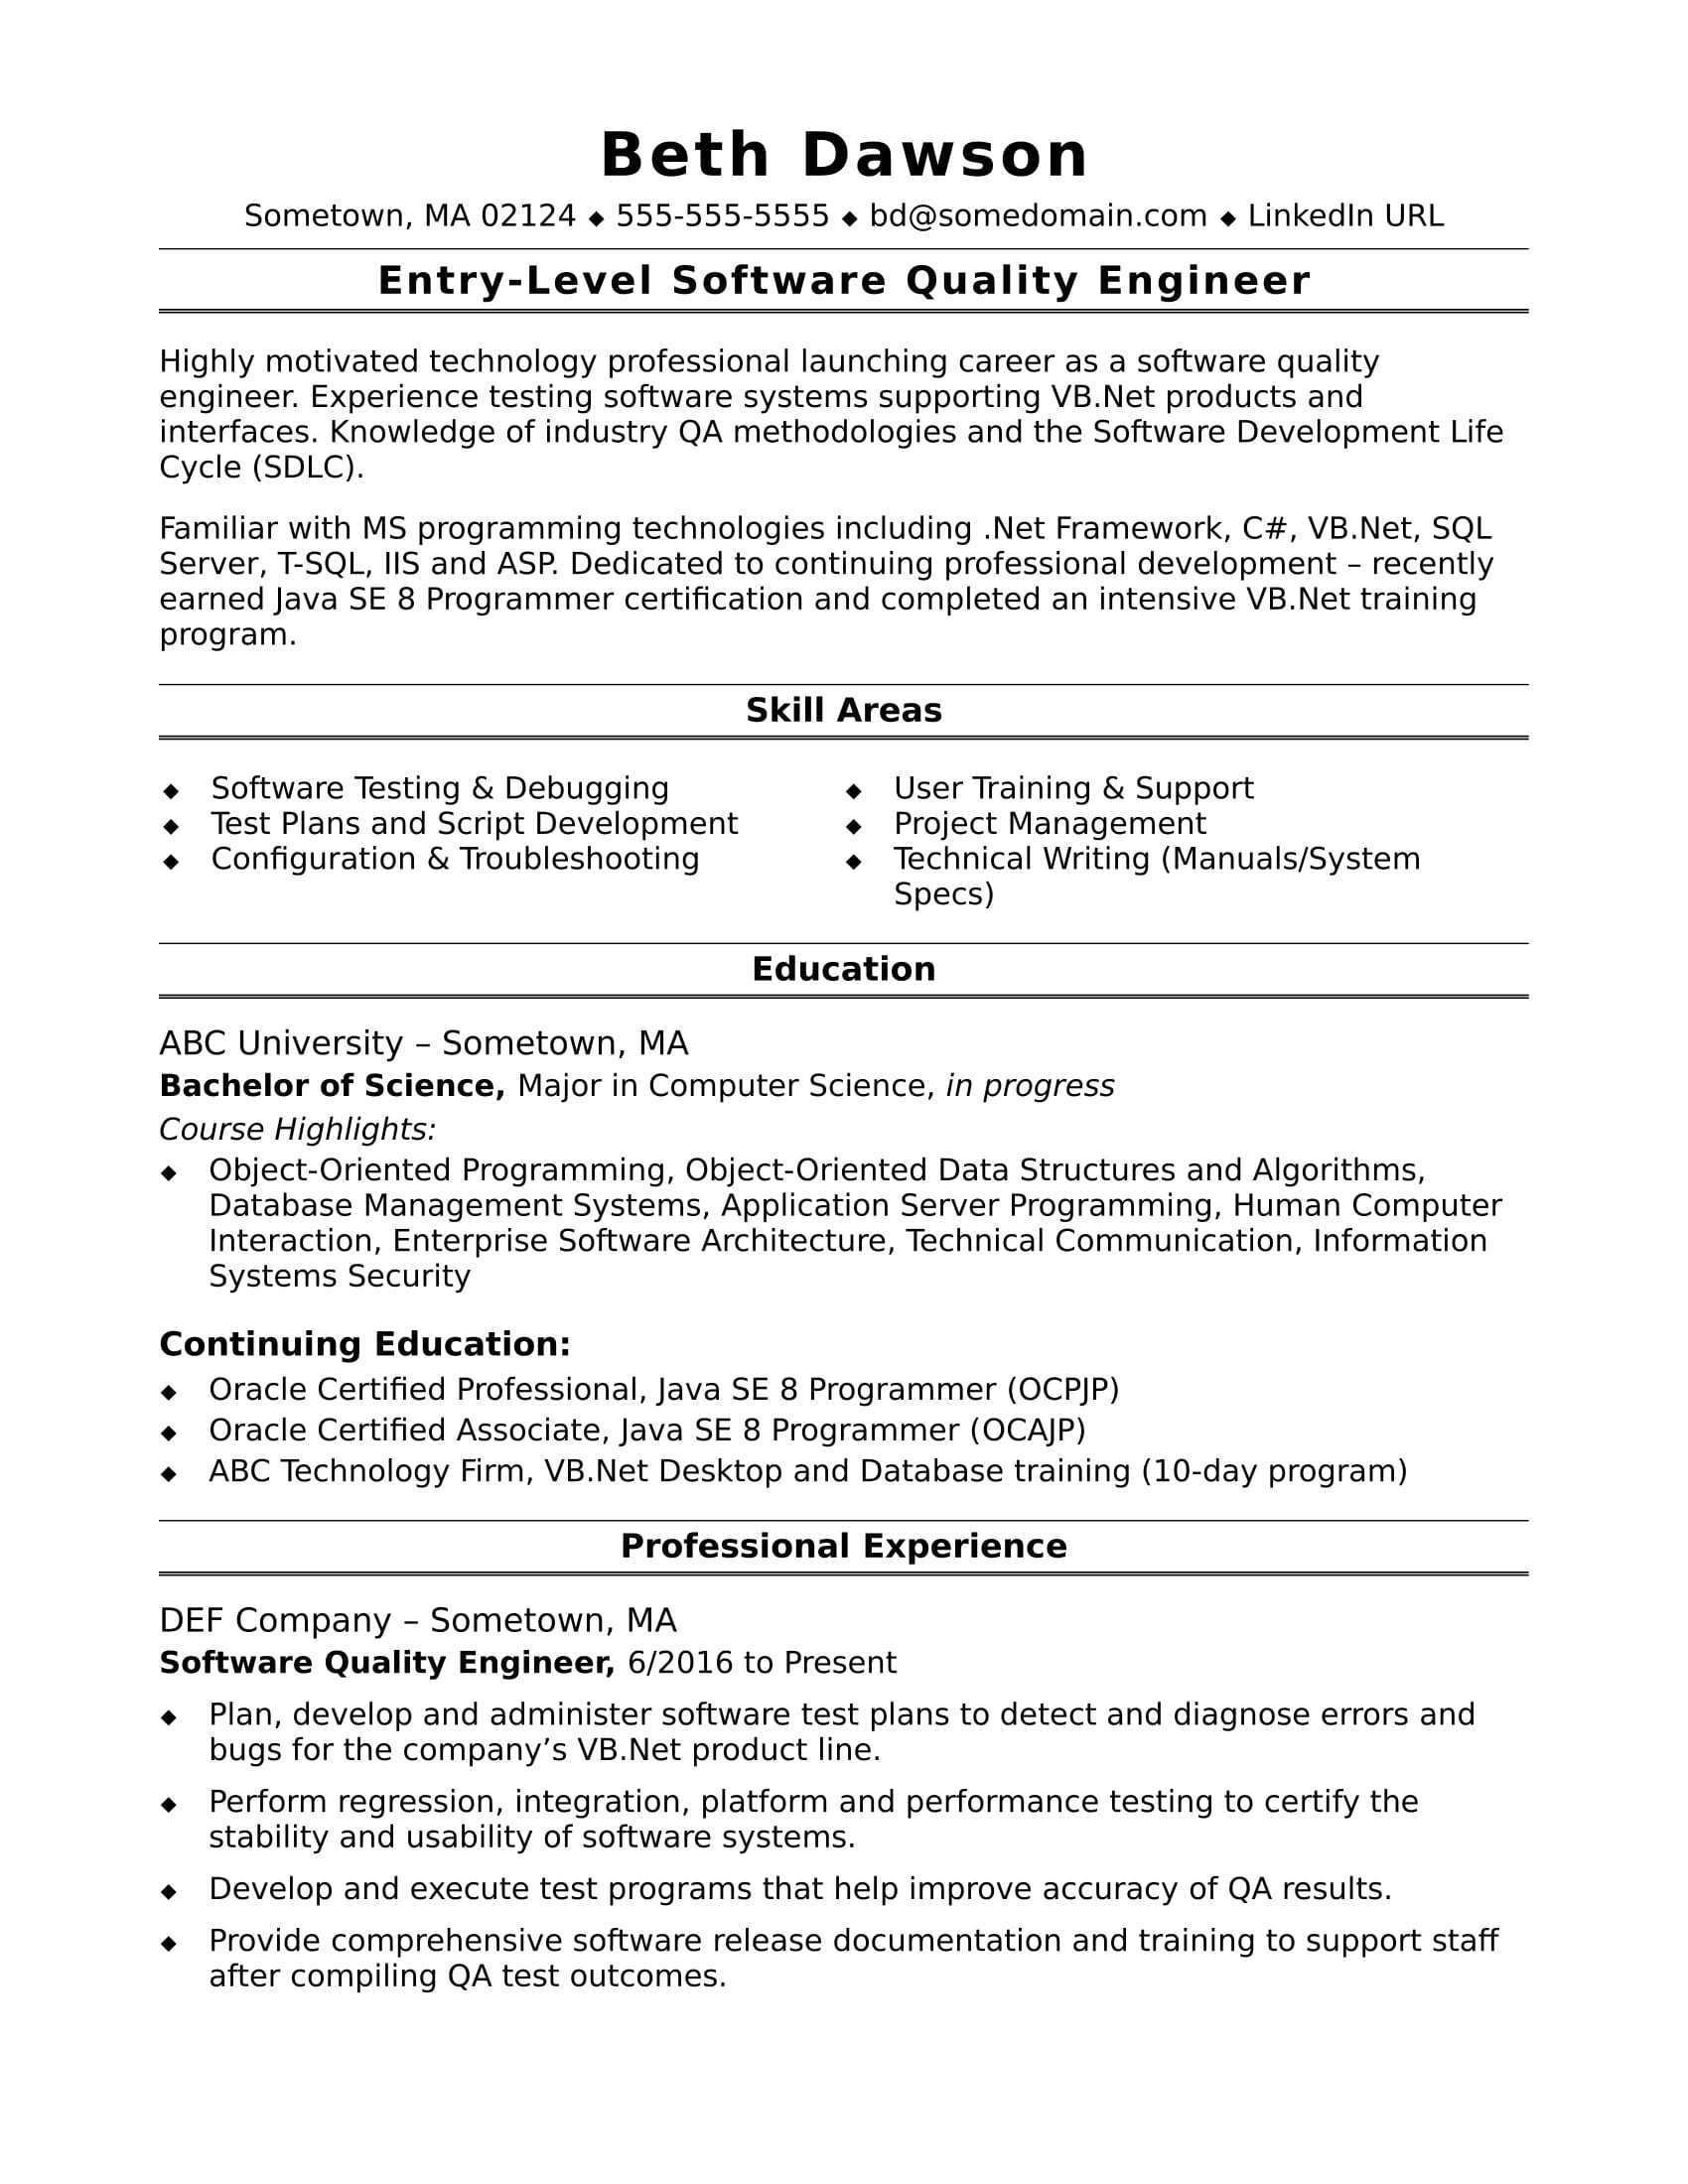 Sample Resume software Engineer Entry Level Sample Resume for An Entry-level Quality Engineer Monster.com